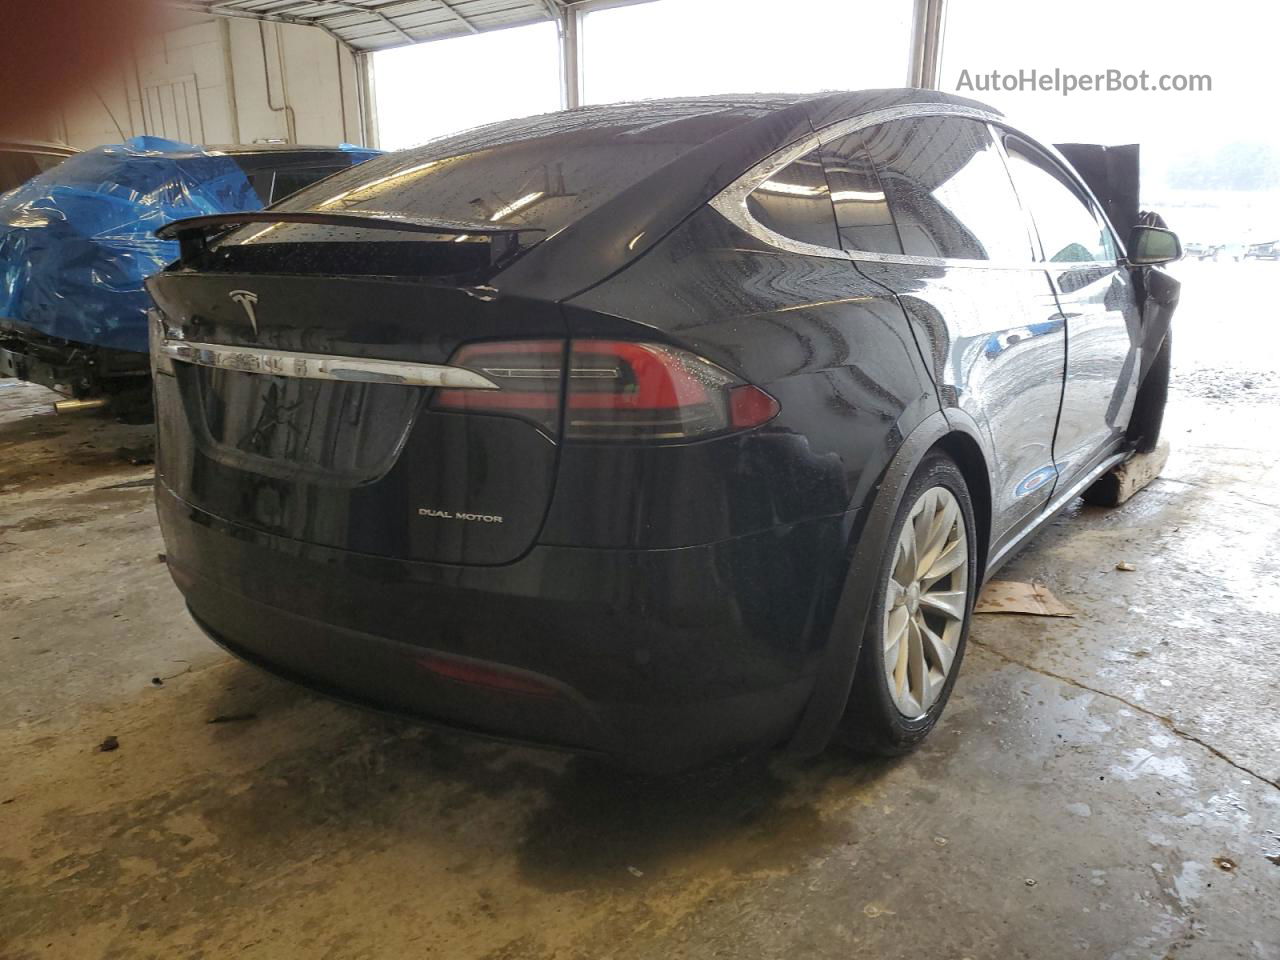 2021 Tesla Model X  Black vin: 5YJXCDE28MF321590